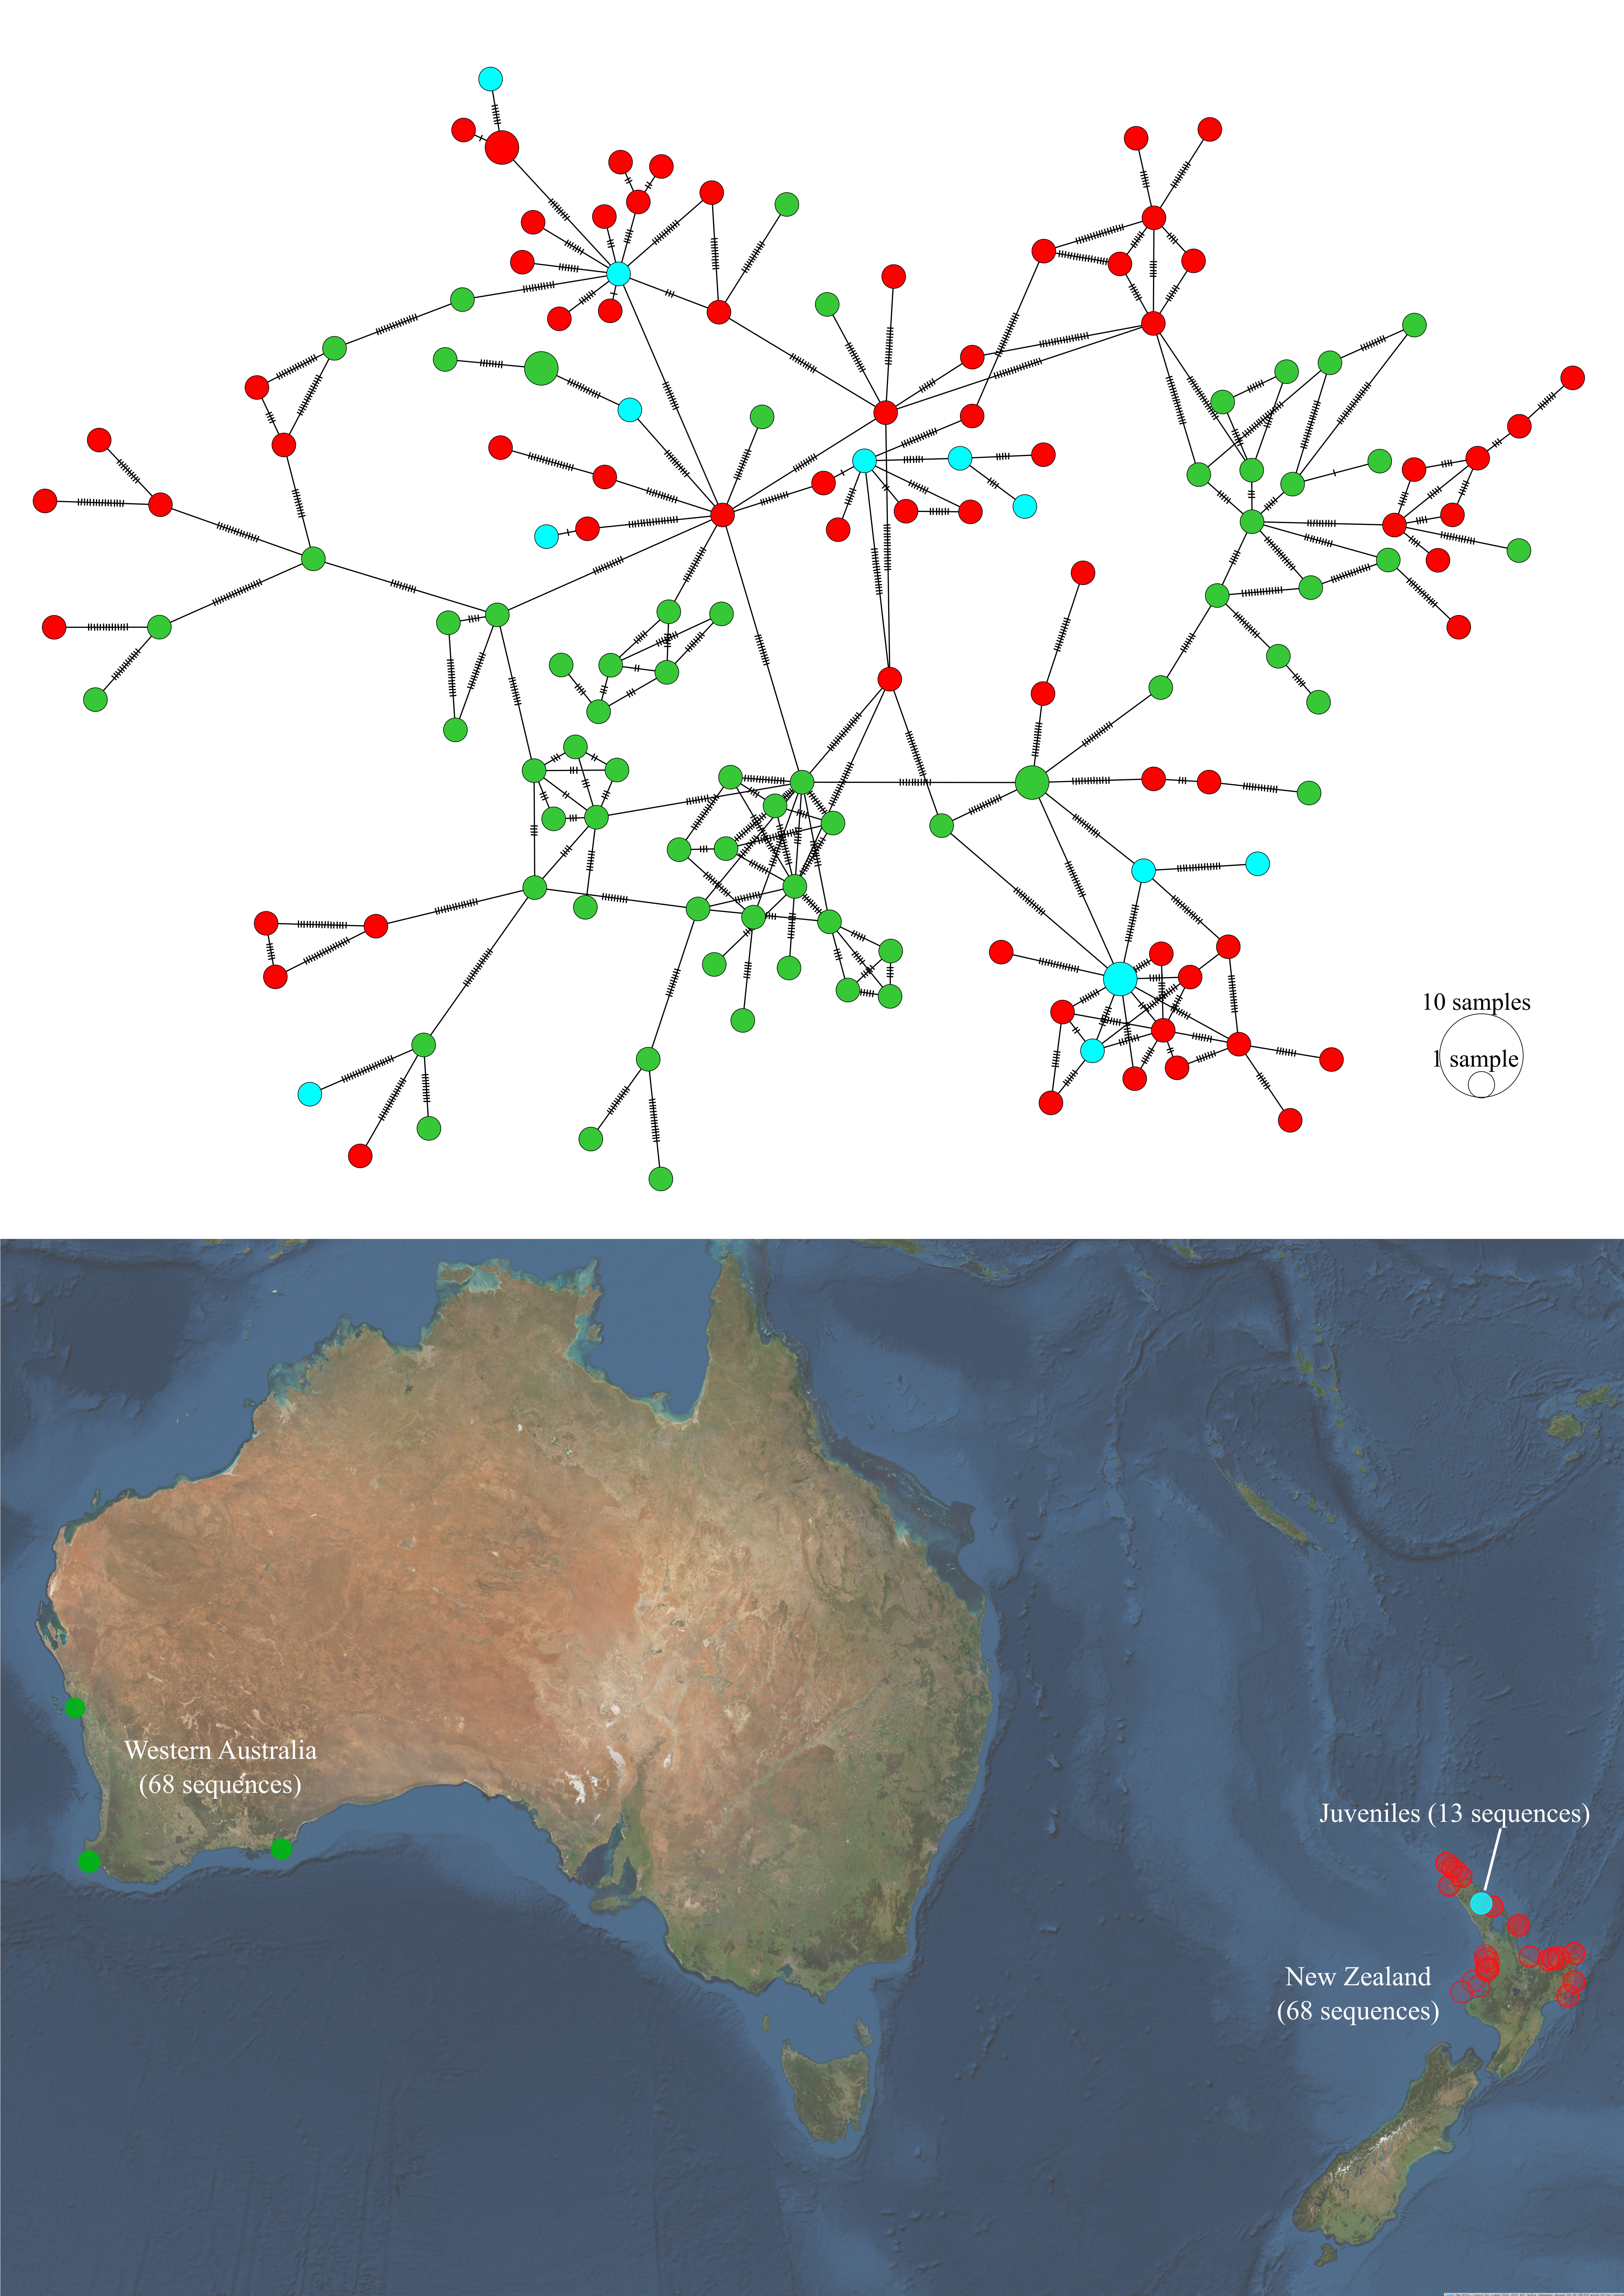 Haplotype network and sampling locations of juvenile *P. georgianus* from Whangarei (New Zealand), adult *P. georgianus* from Western Australia and adult *P. georgianus* from New Zealand.